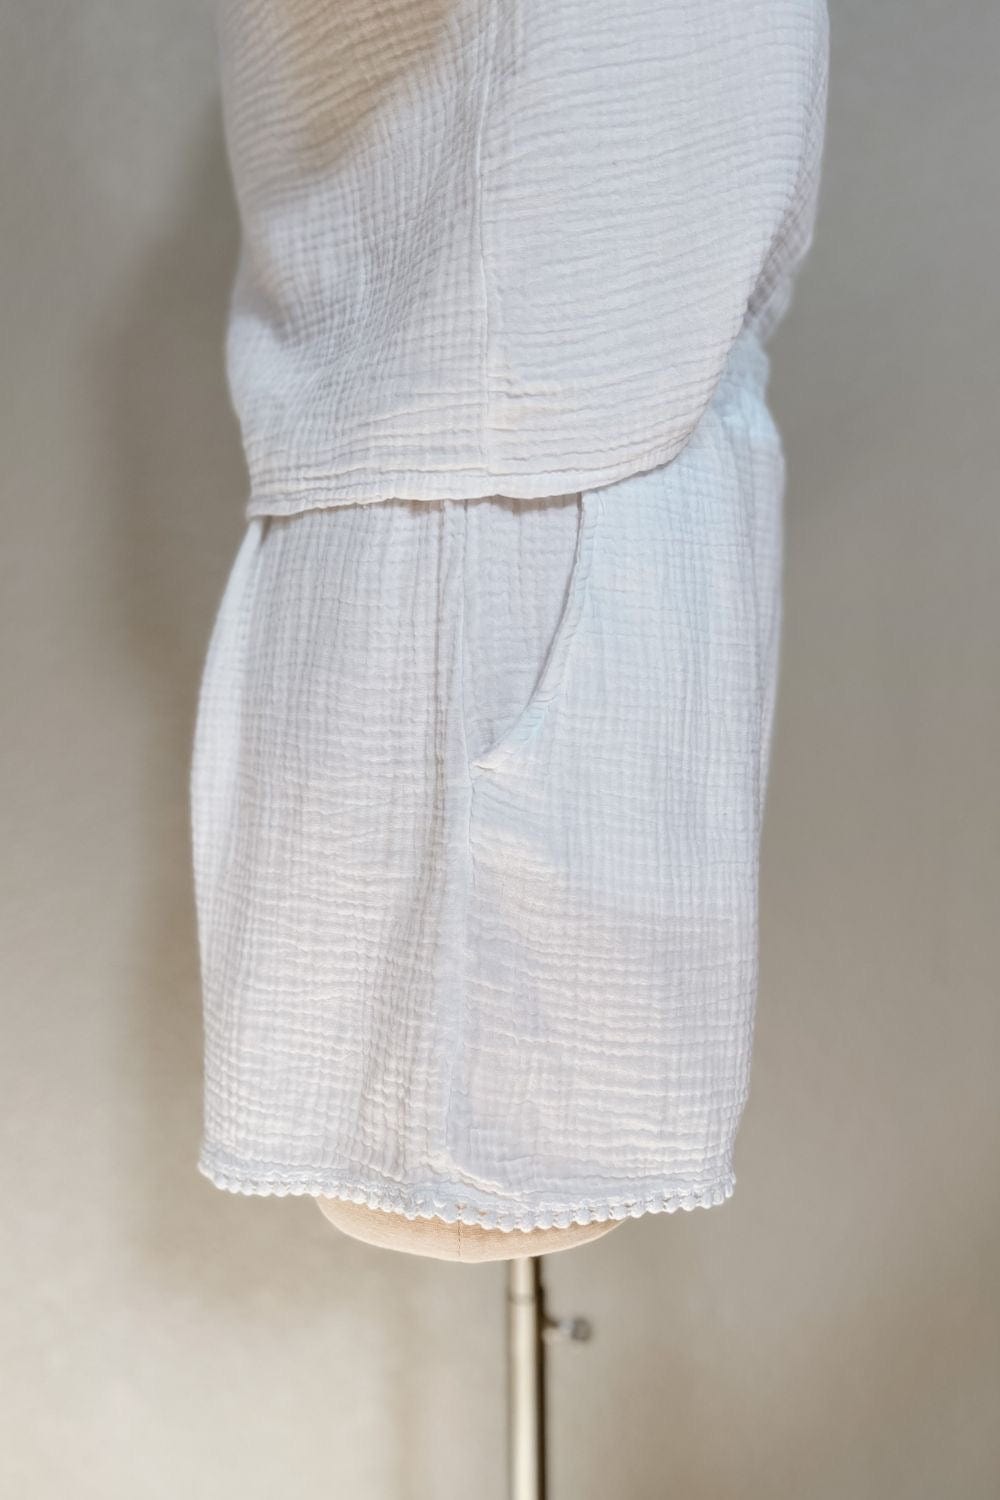 Saint Barths Italian White Cotton Gauze Shorts | Premium Quality & Stylish Comfort - Women's Shorts - Blooming Daily